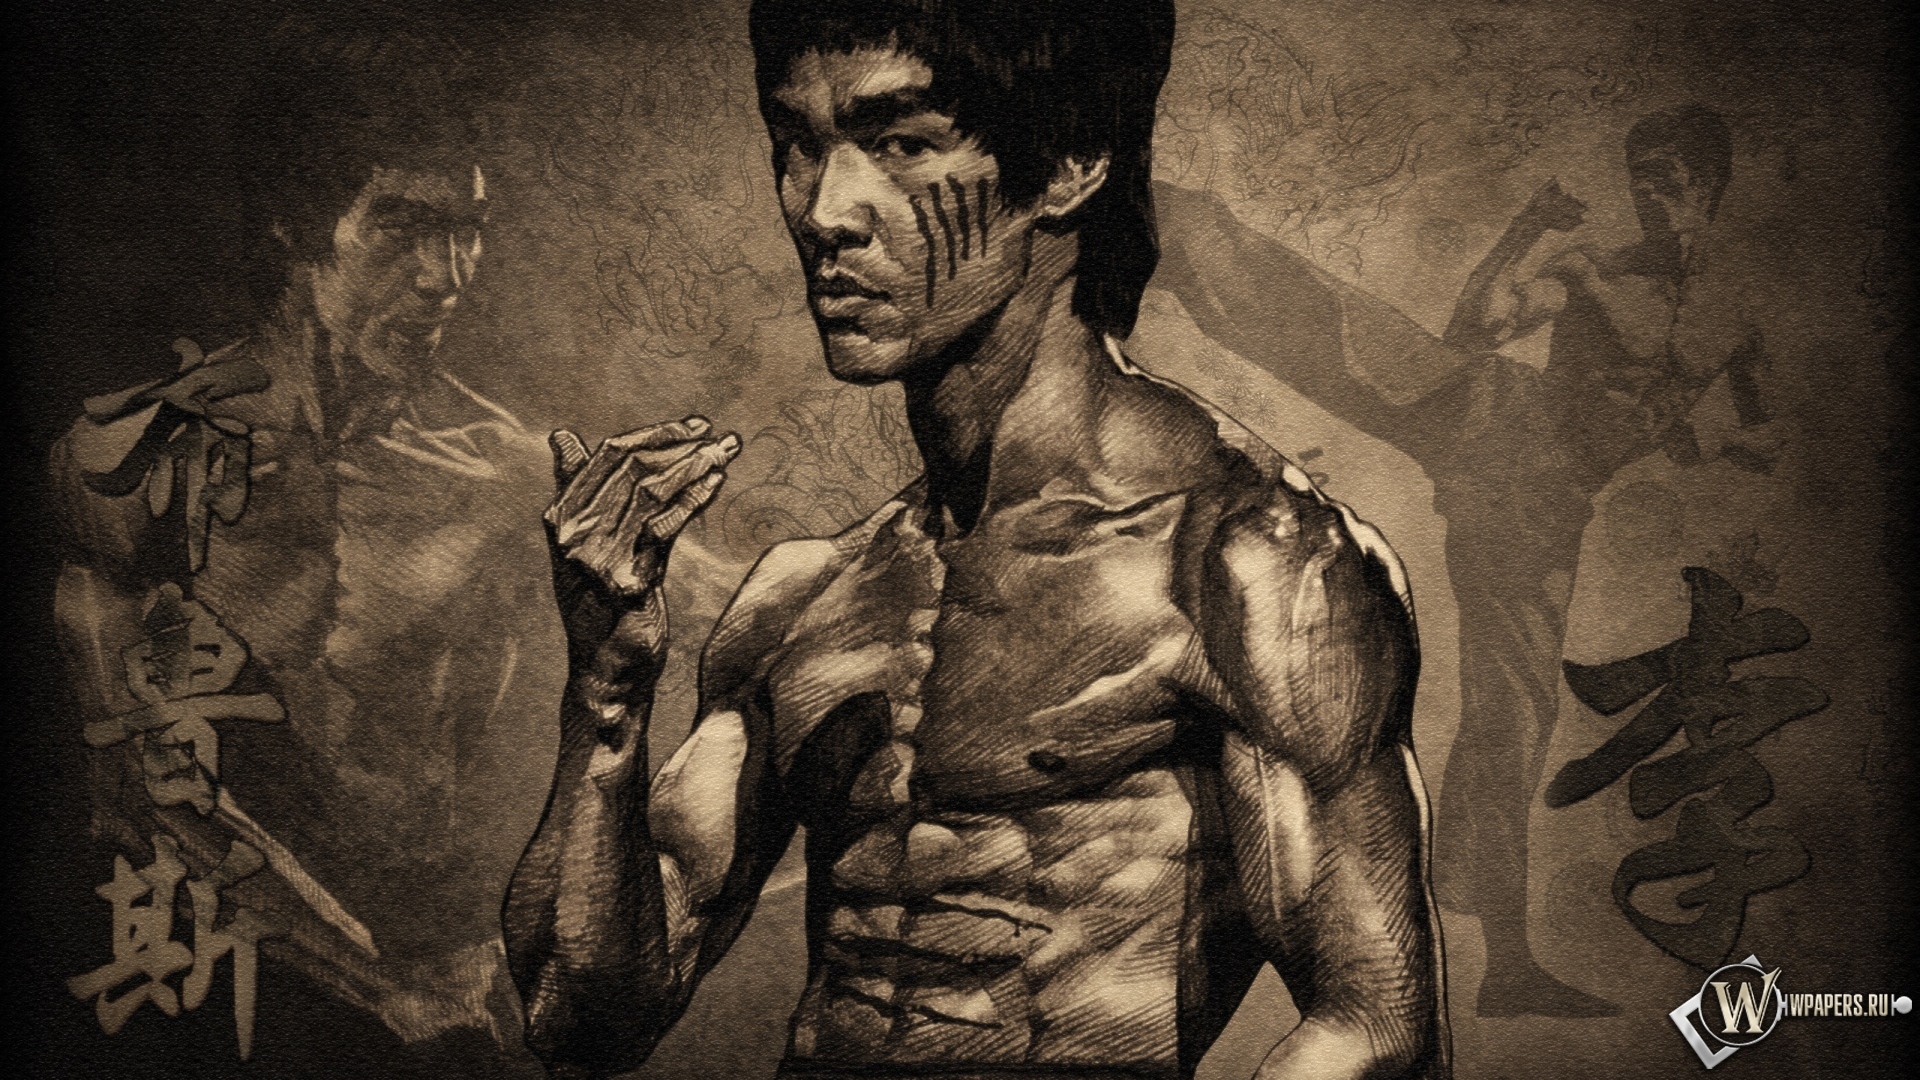 Bruce Lee 1920x1080